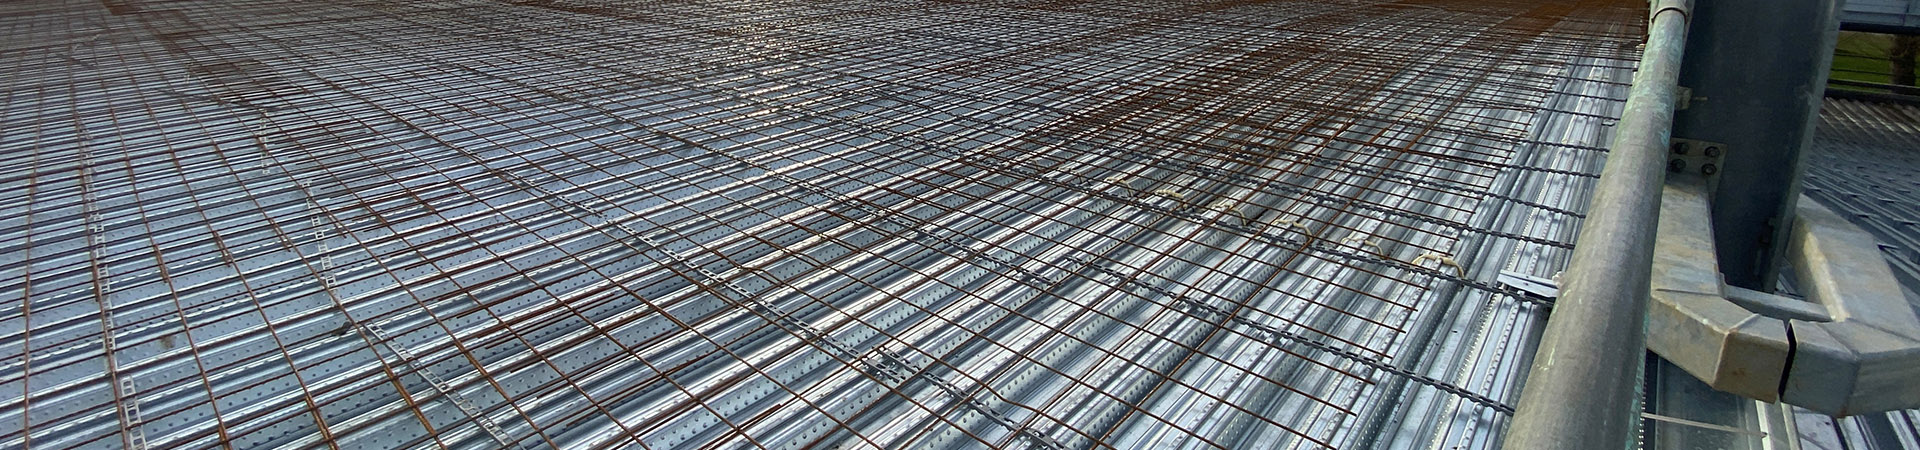 Metal decking prior to a concrete pour